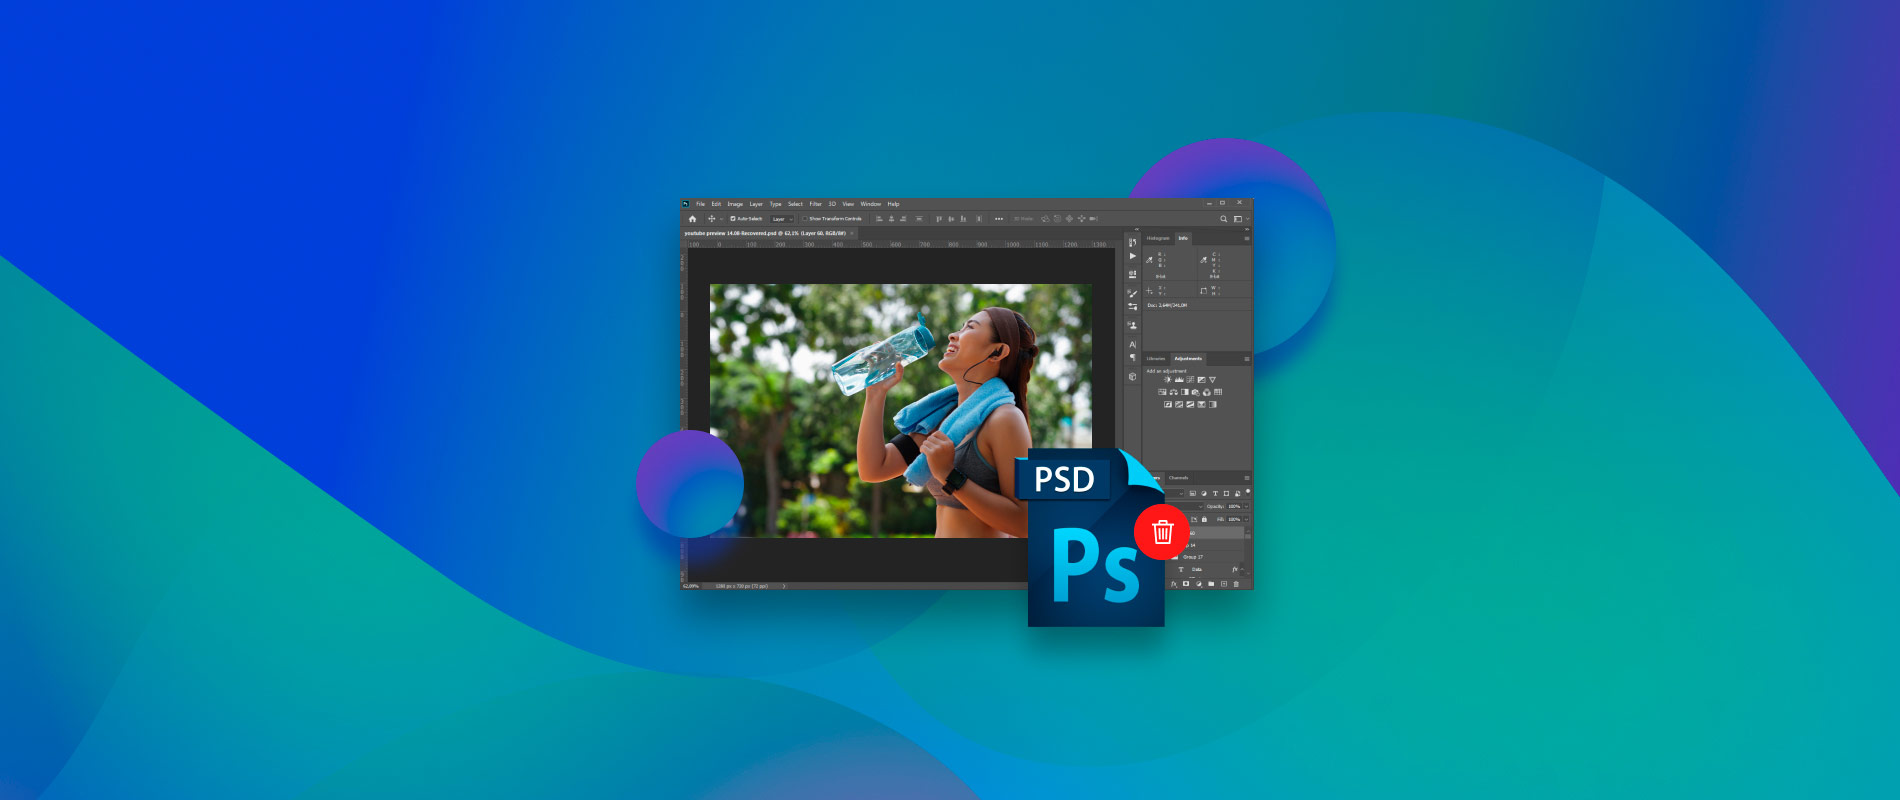 photoshop documents app for mac